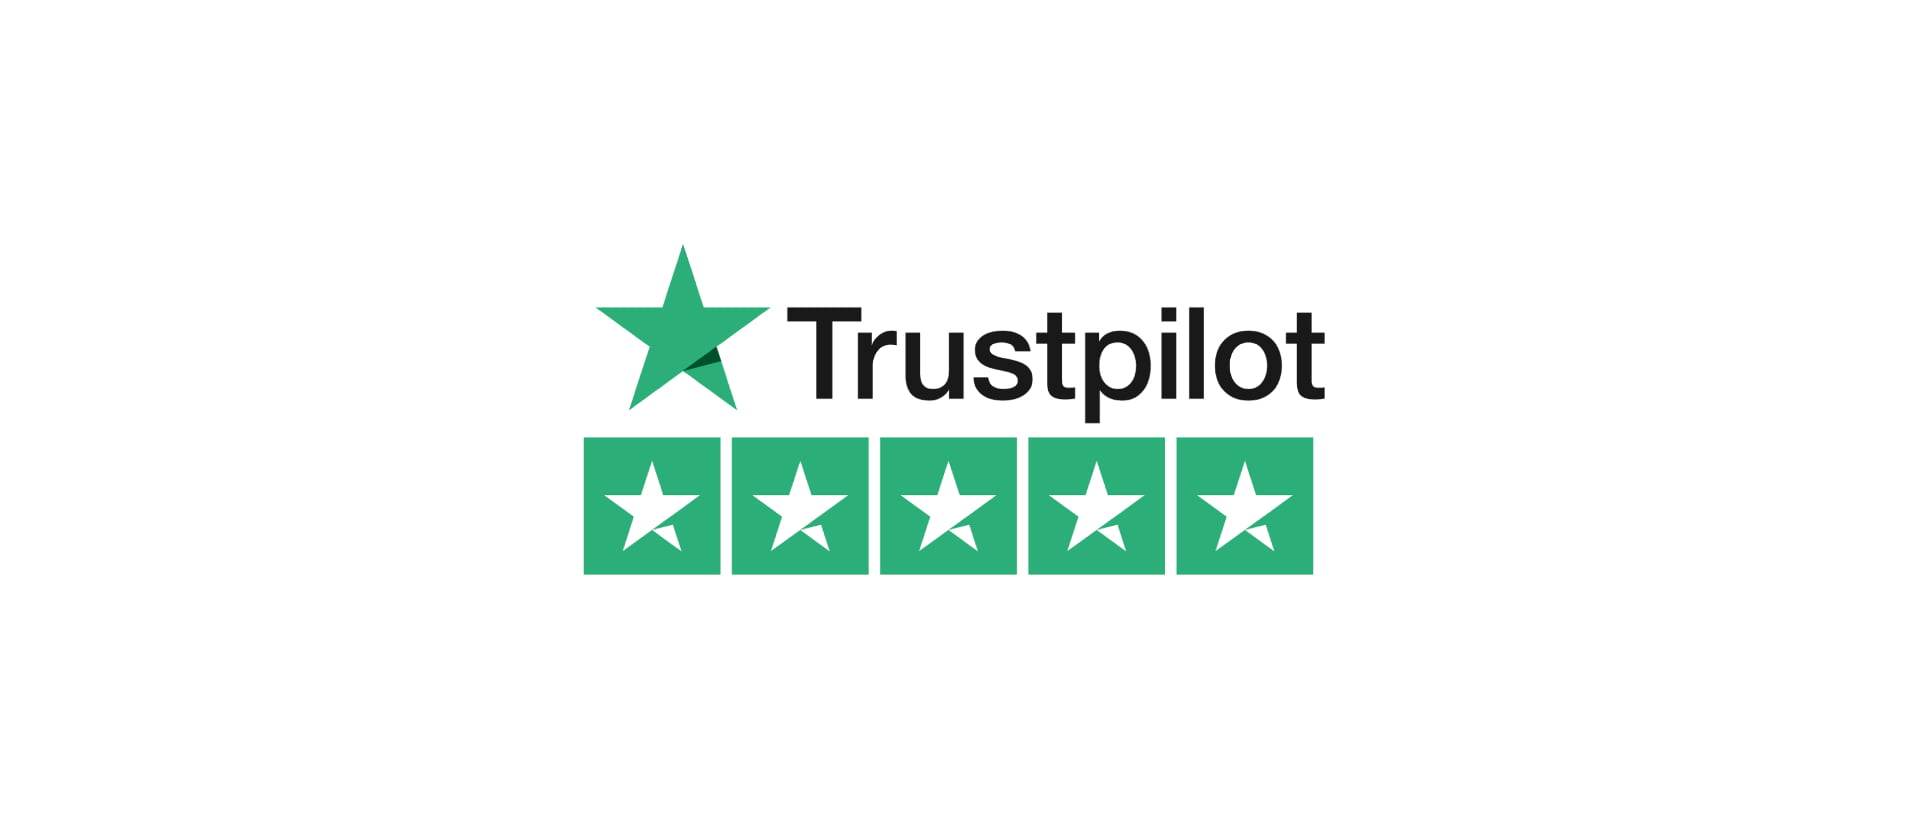 5 star trustpilot rating